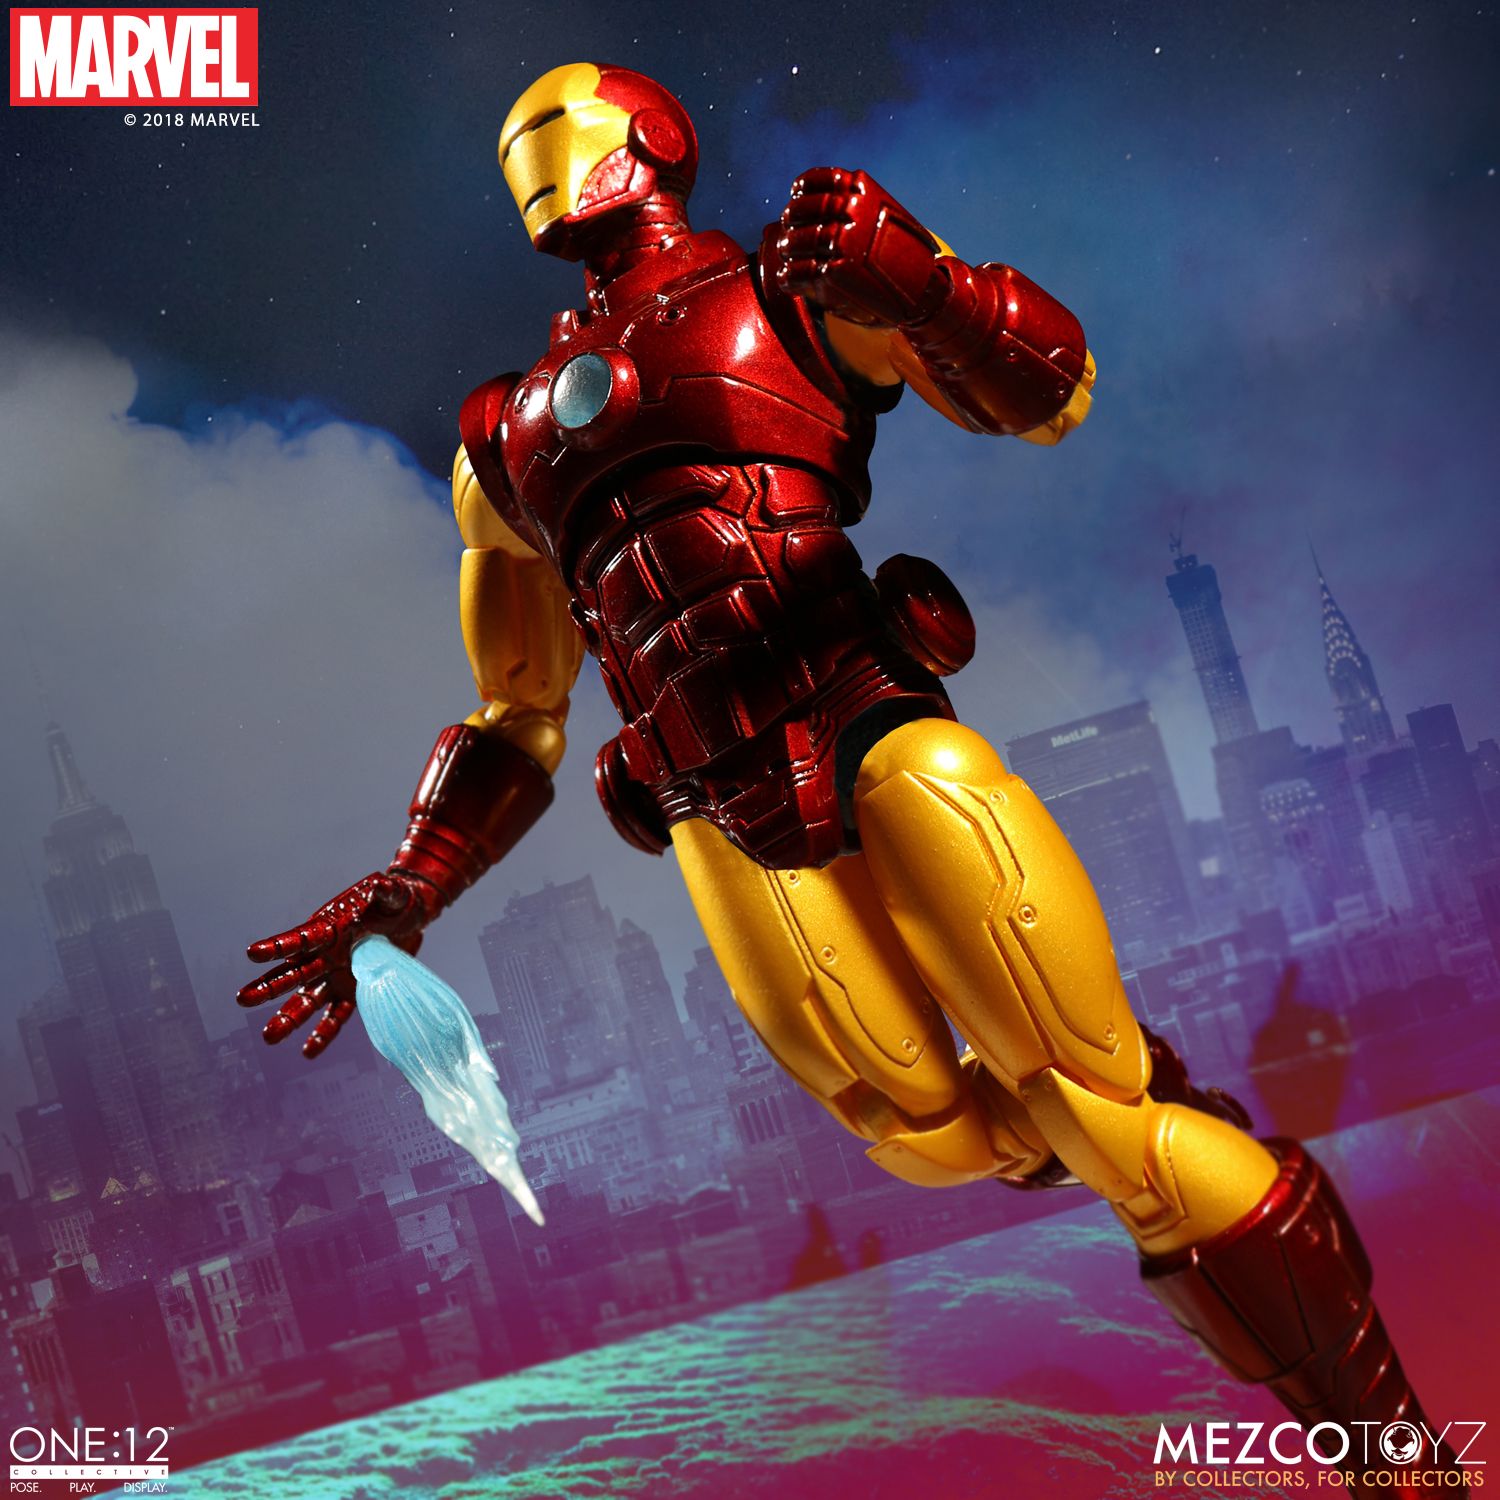 Mezco - One:12 Collective - Iron Man - Marvelous Toys